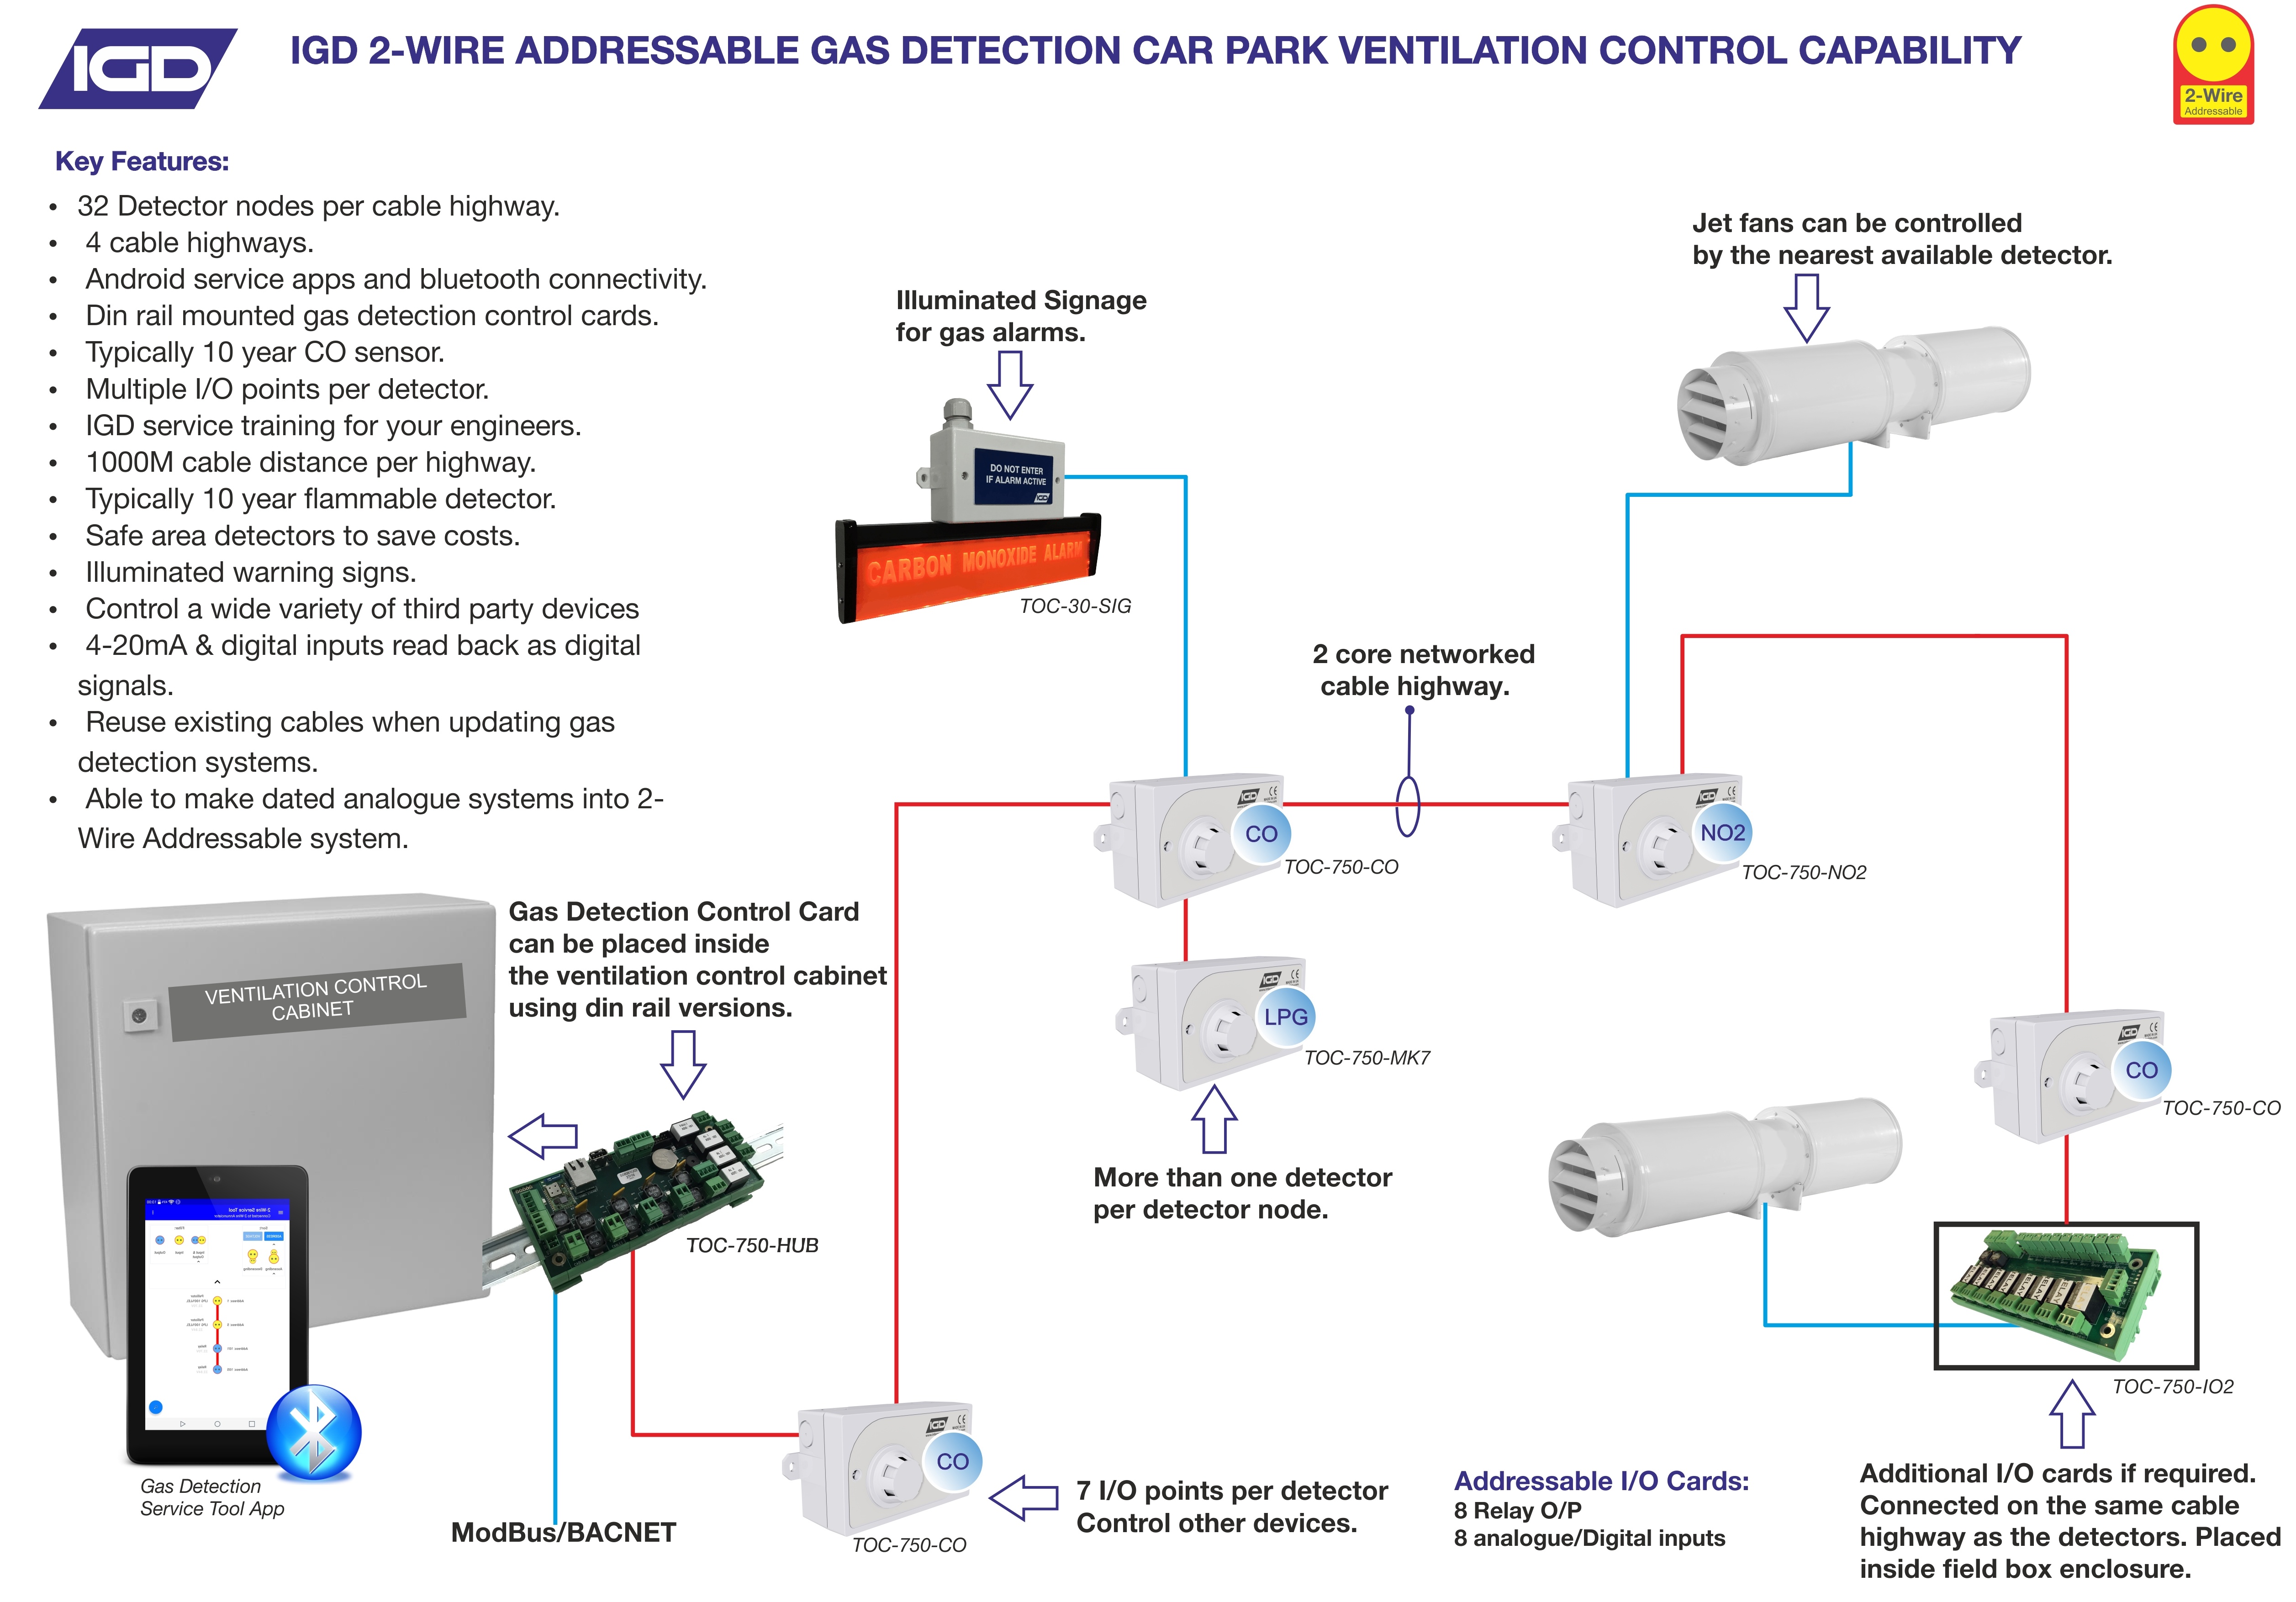 Car Park Gas Detection Applications International Gas Detectors 